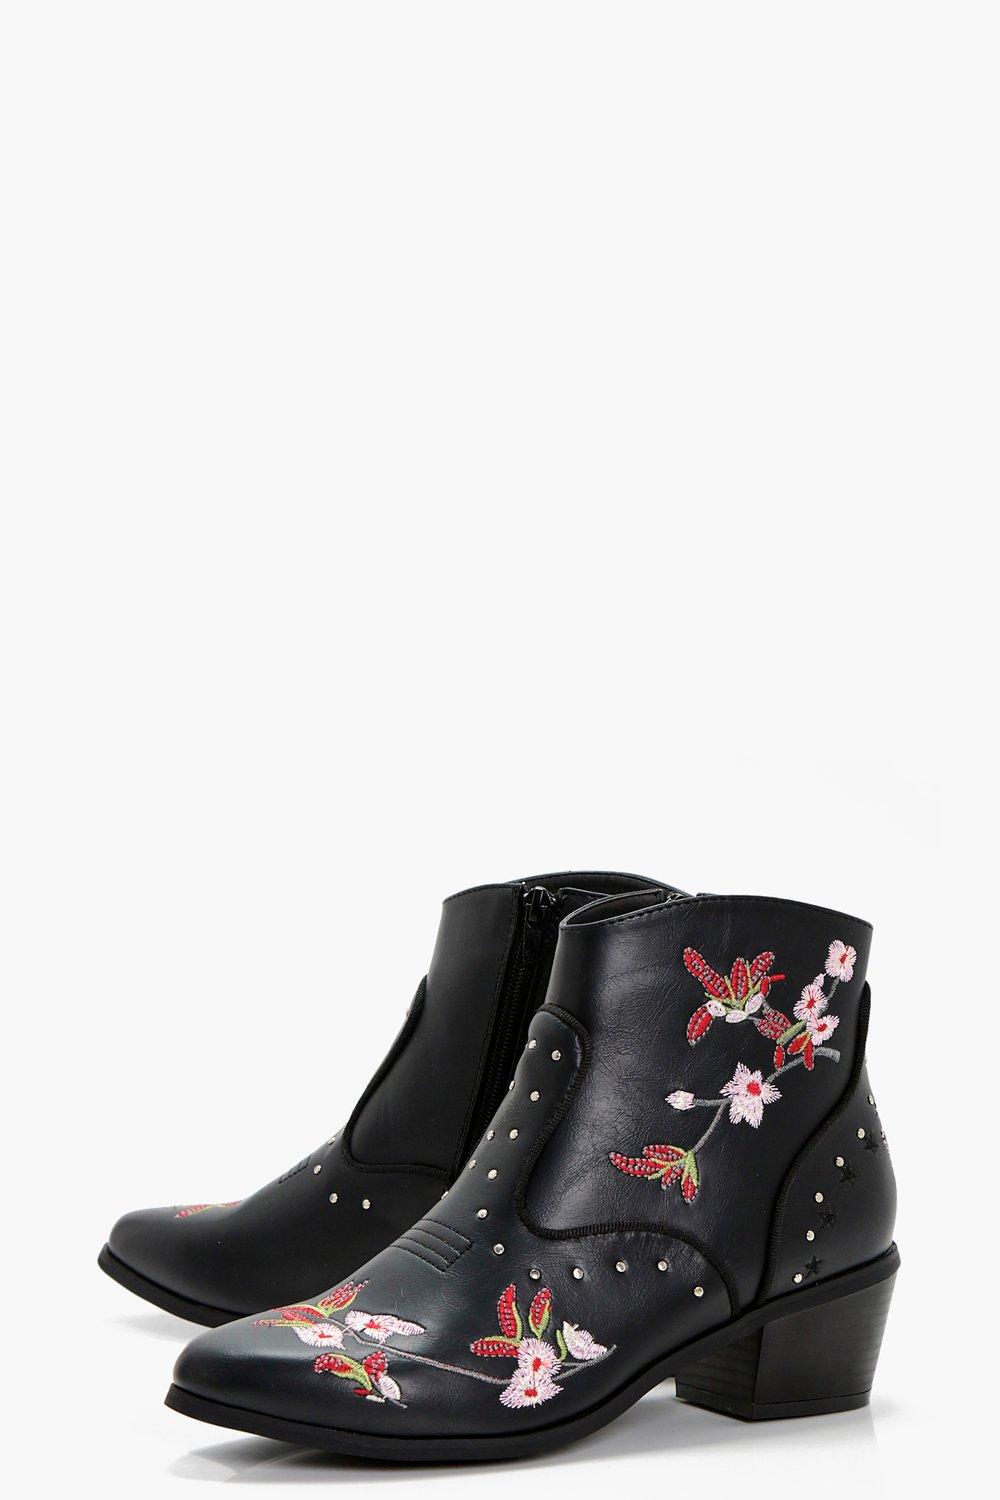 floral chelsea boots